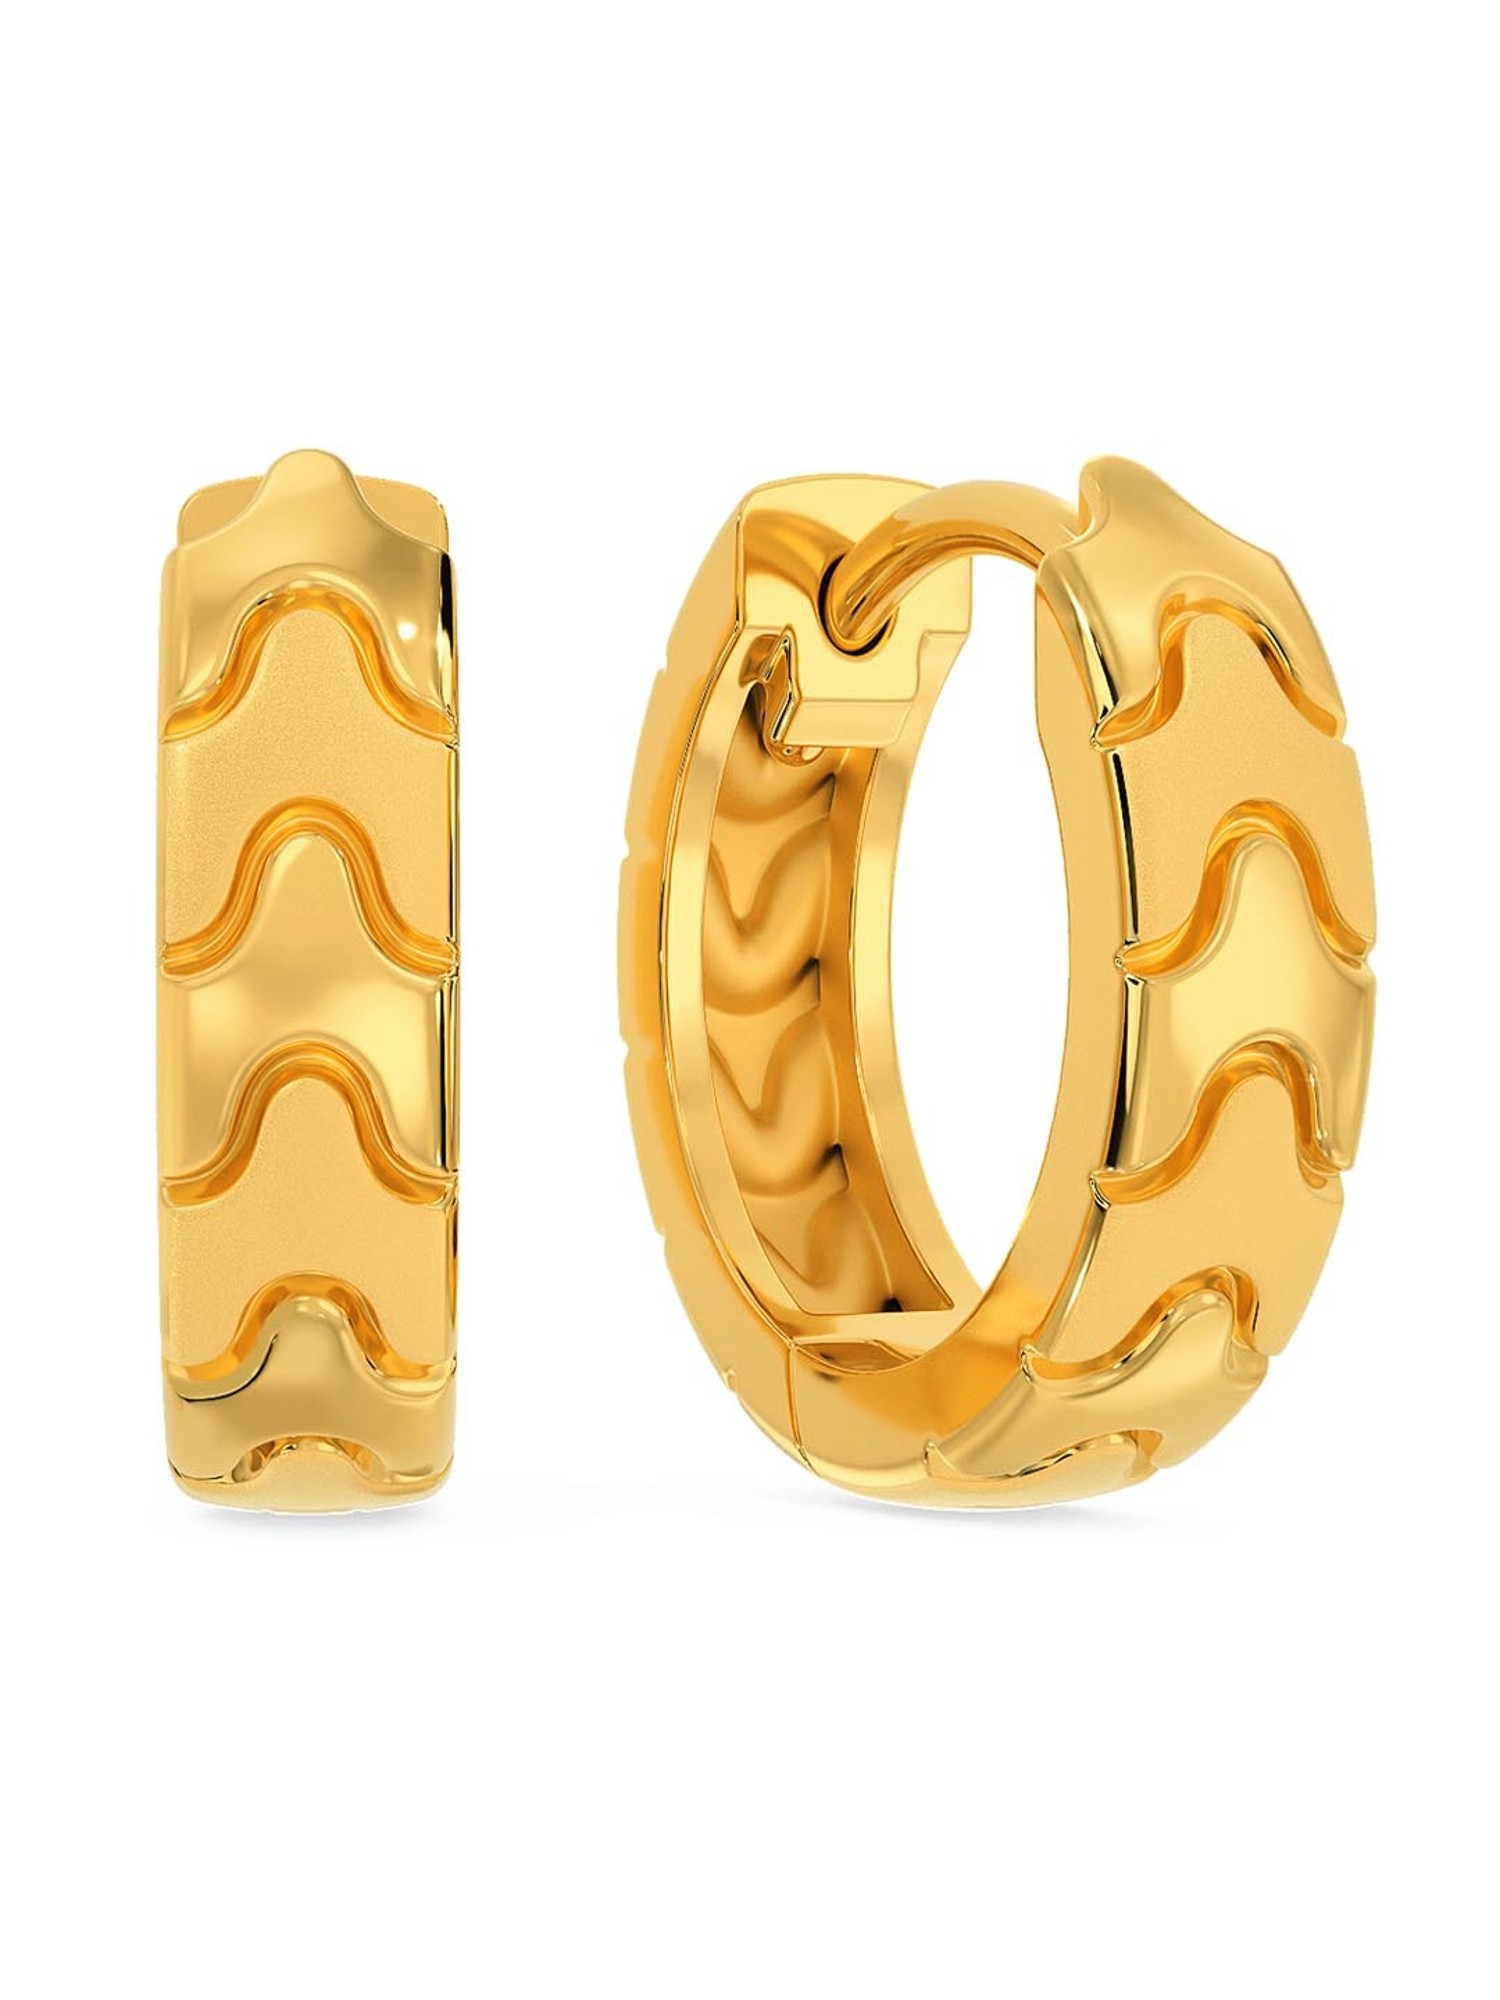 Lauren 18K Gold Earring Set - Gold/Pavé – 18K Gold Plated Sterling Silver,  Cubic Zirconia stones – BaubleBar